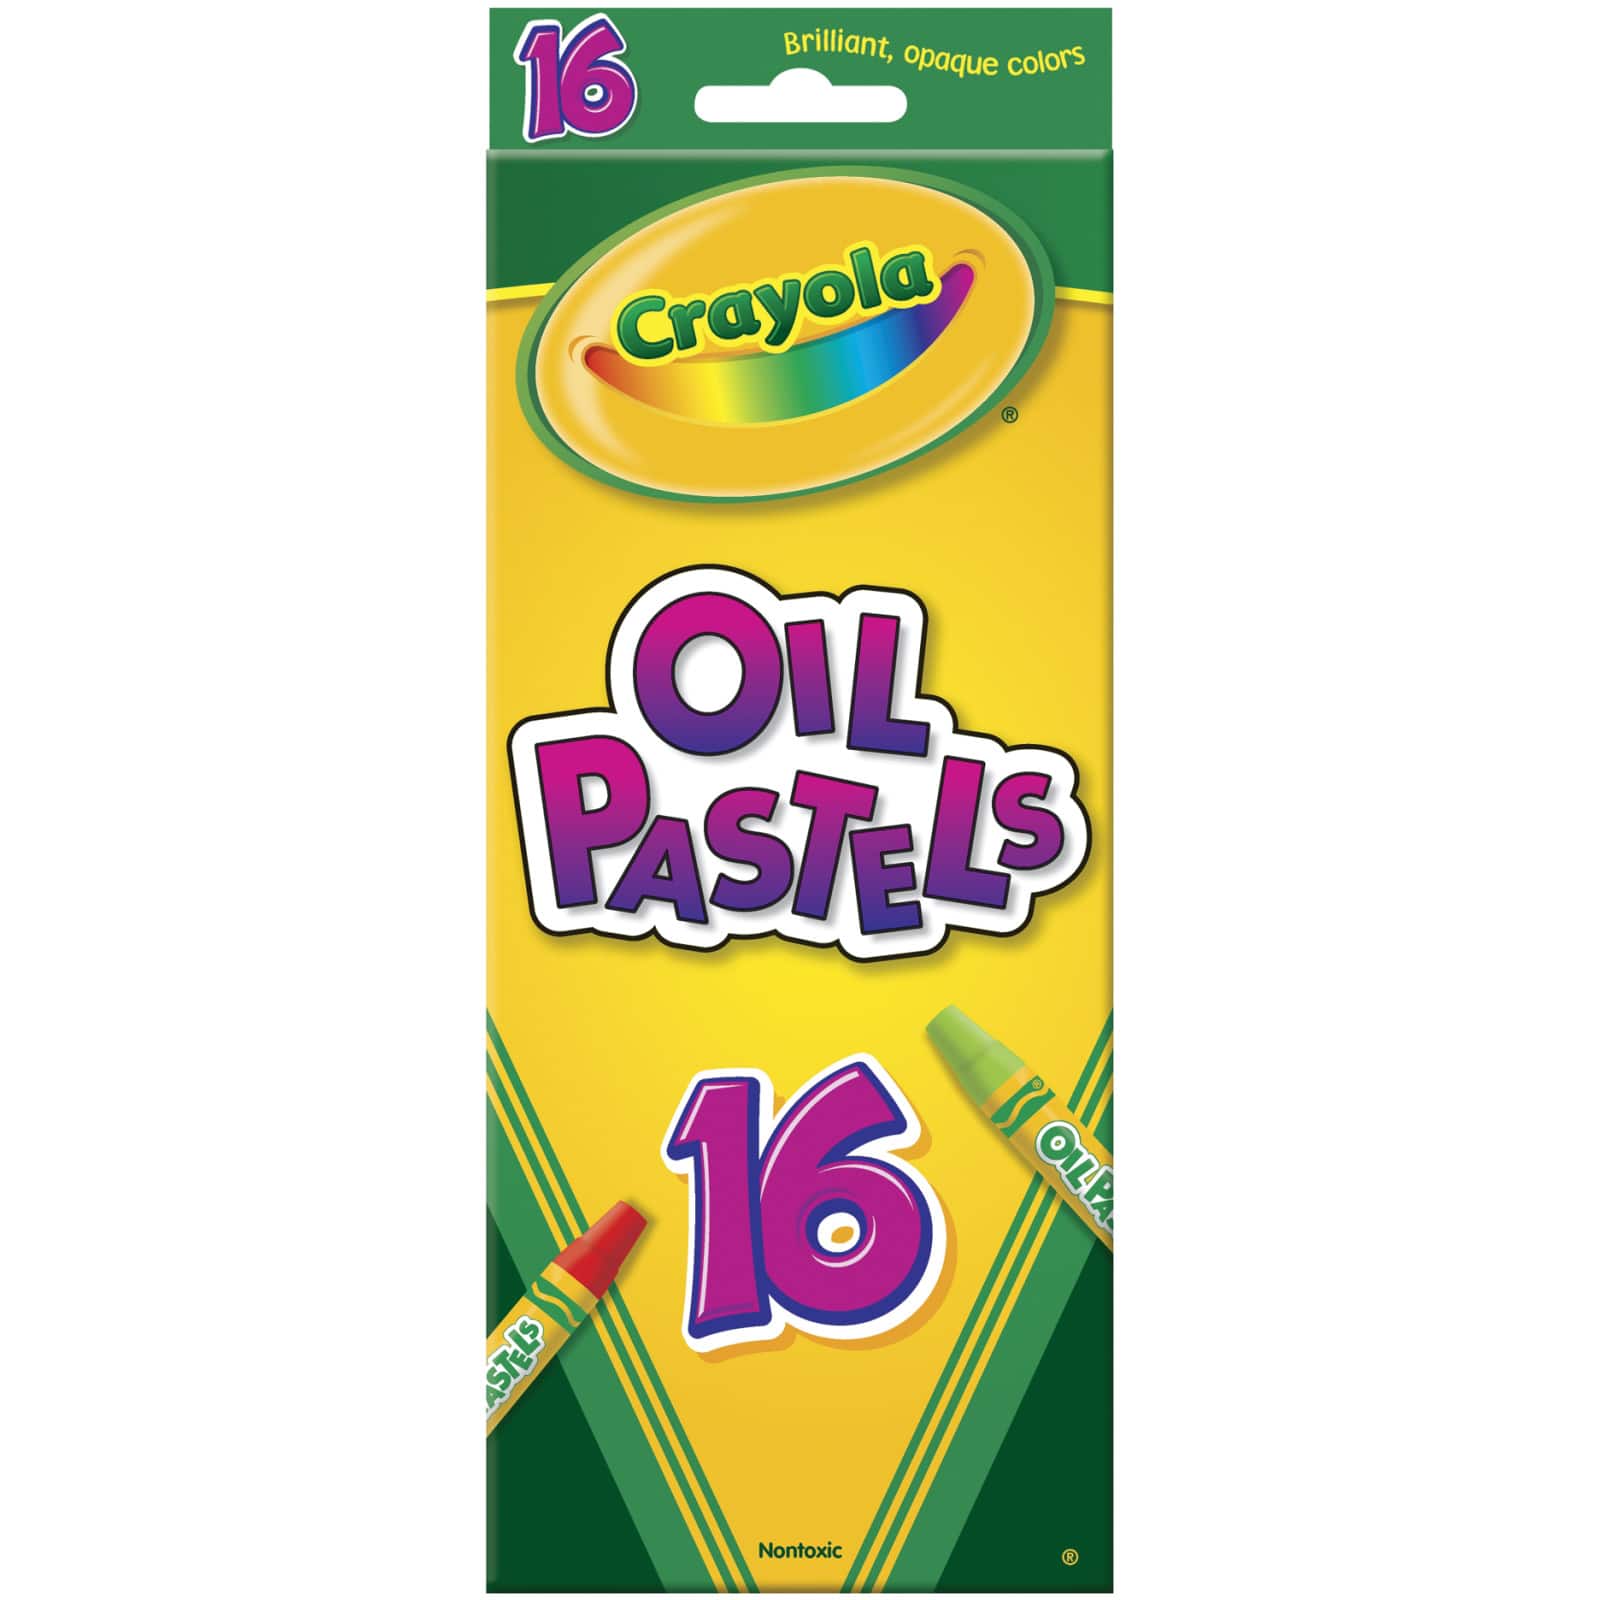 Chalk Pastels (12 Pack)